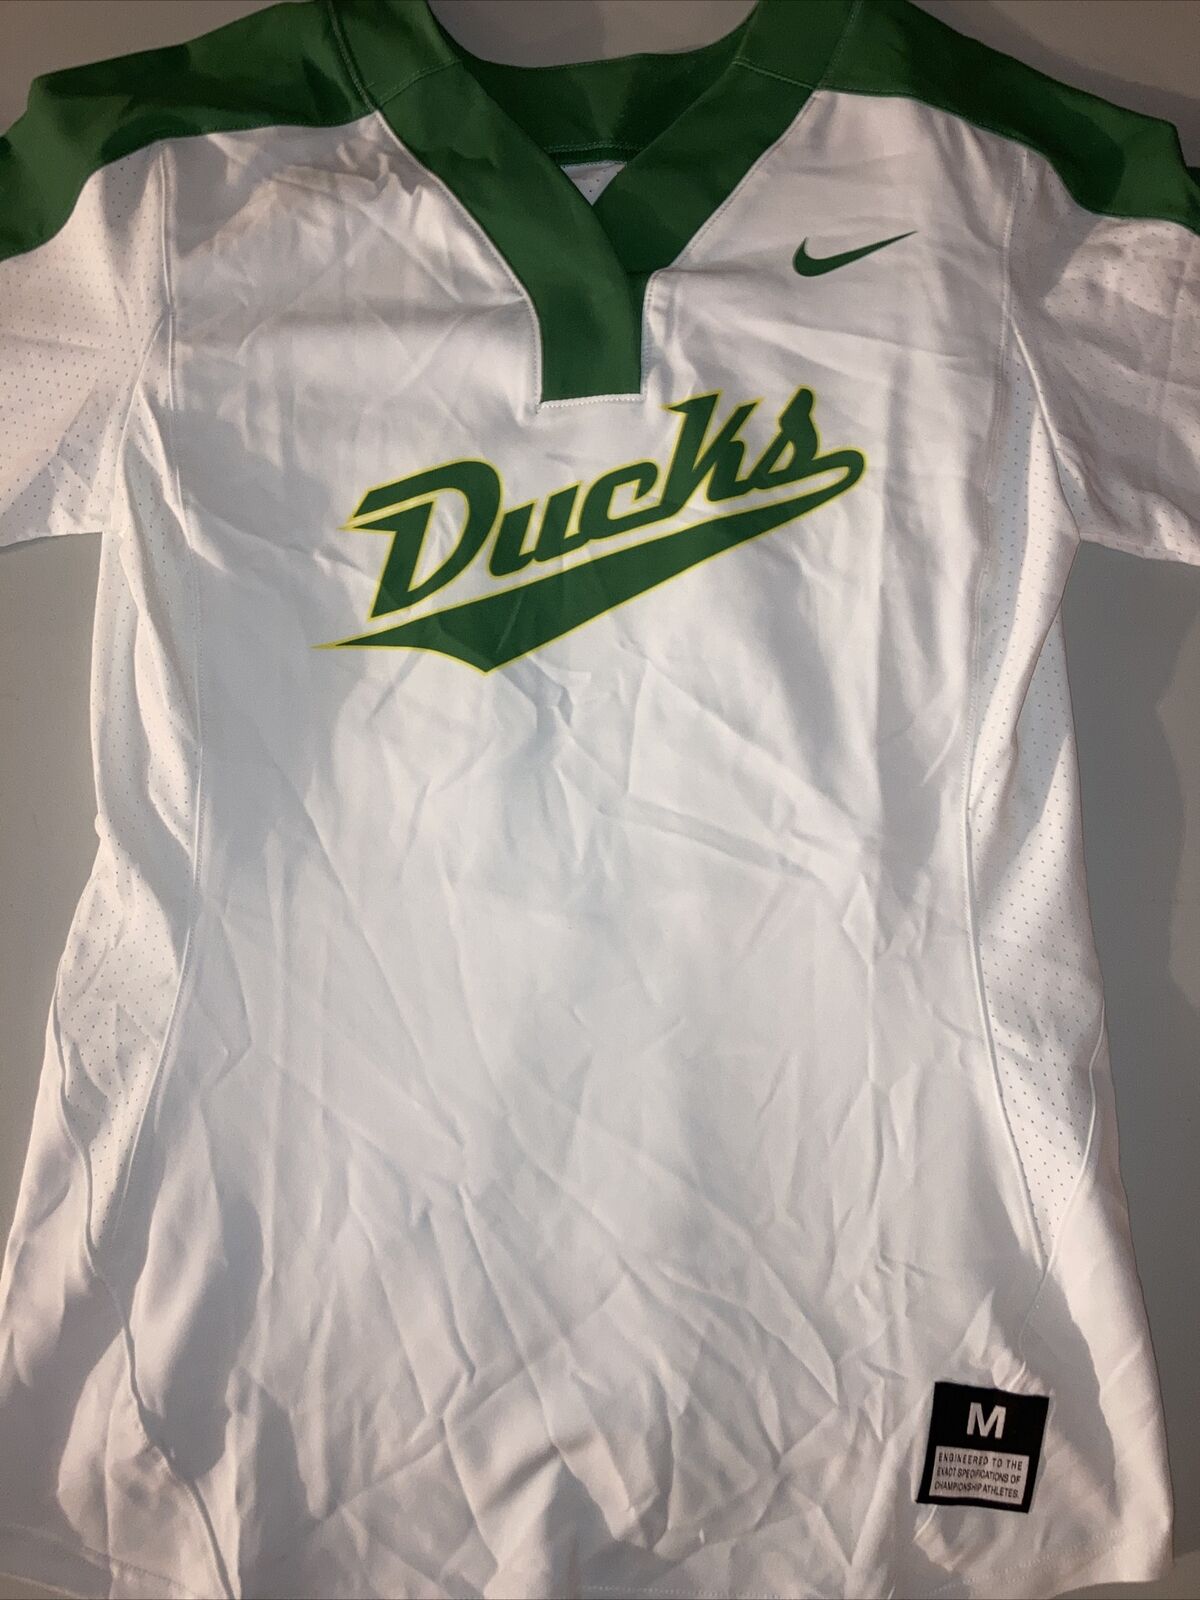 Oregon Softball - The Ducks will wear their pink uniforms